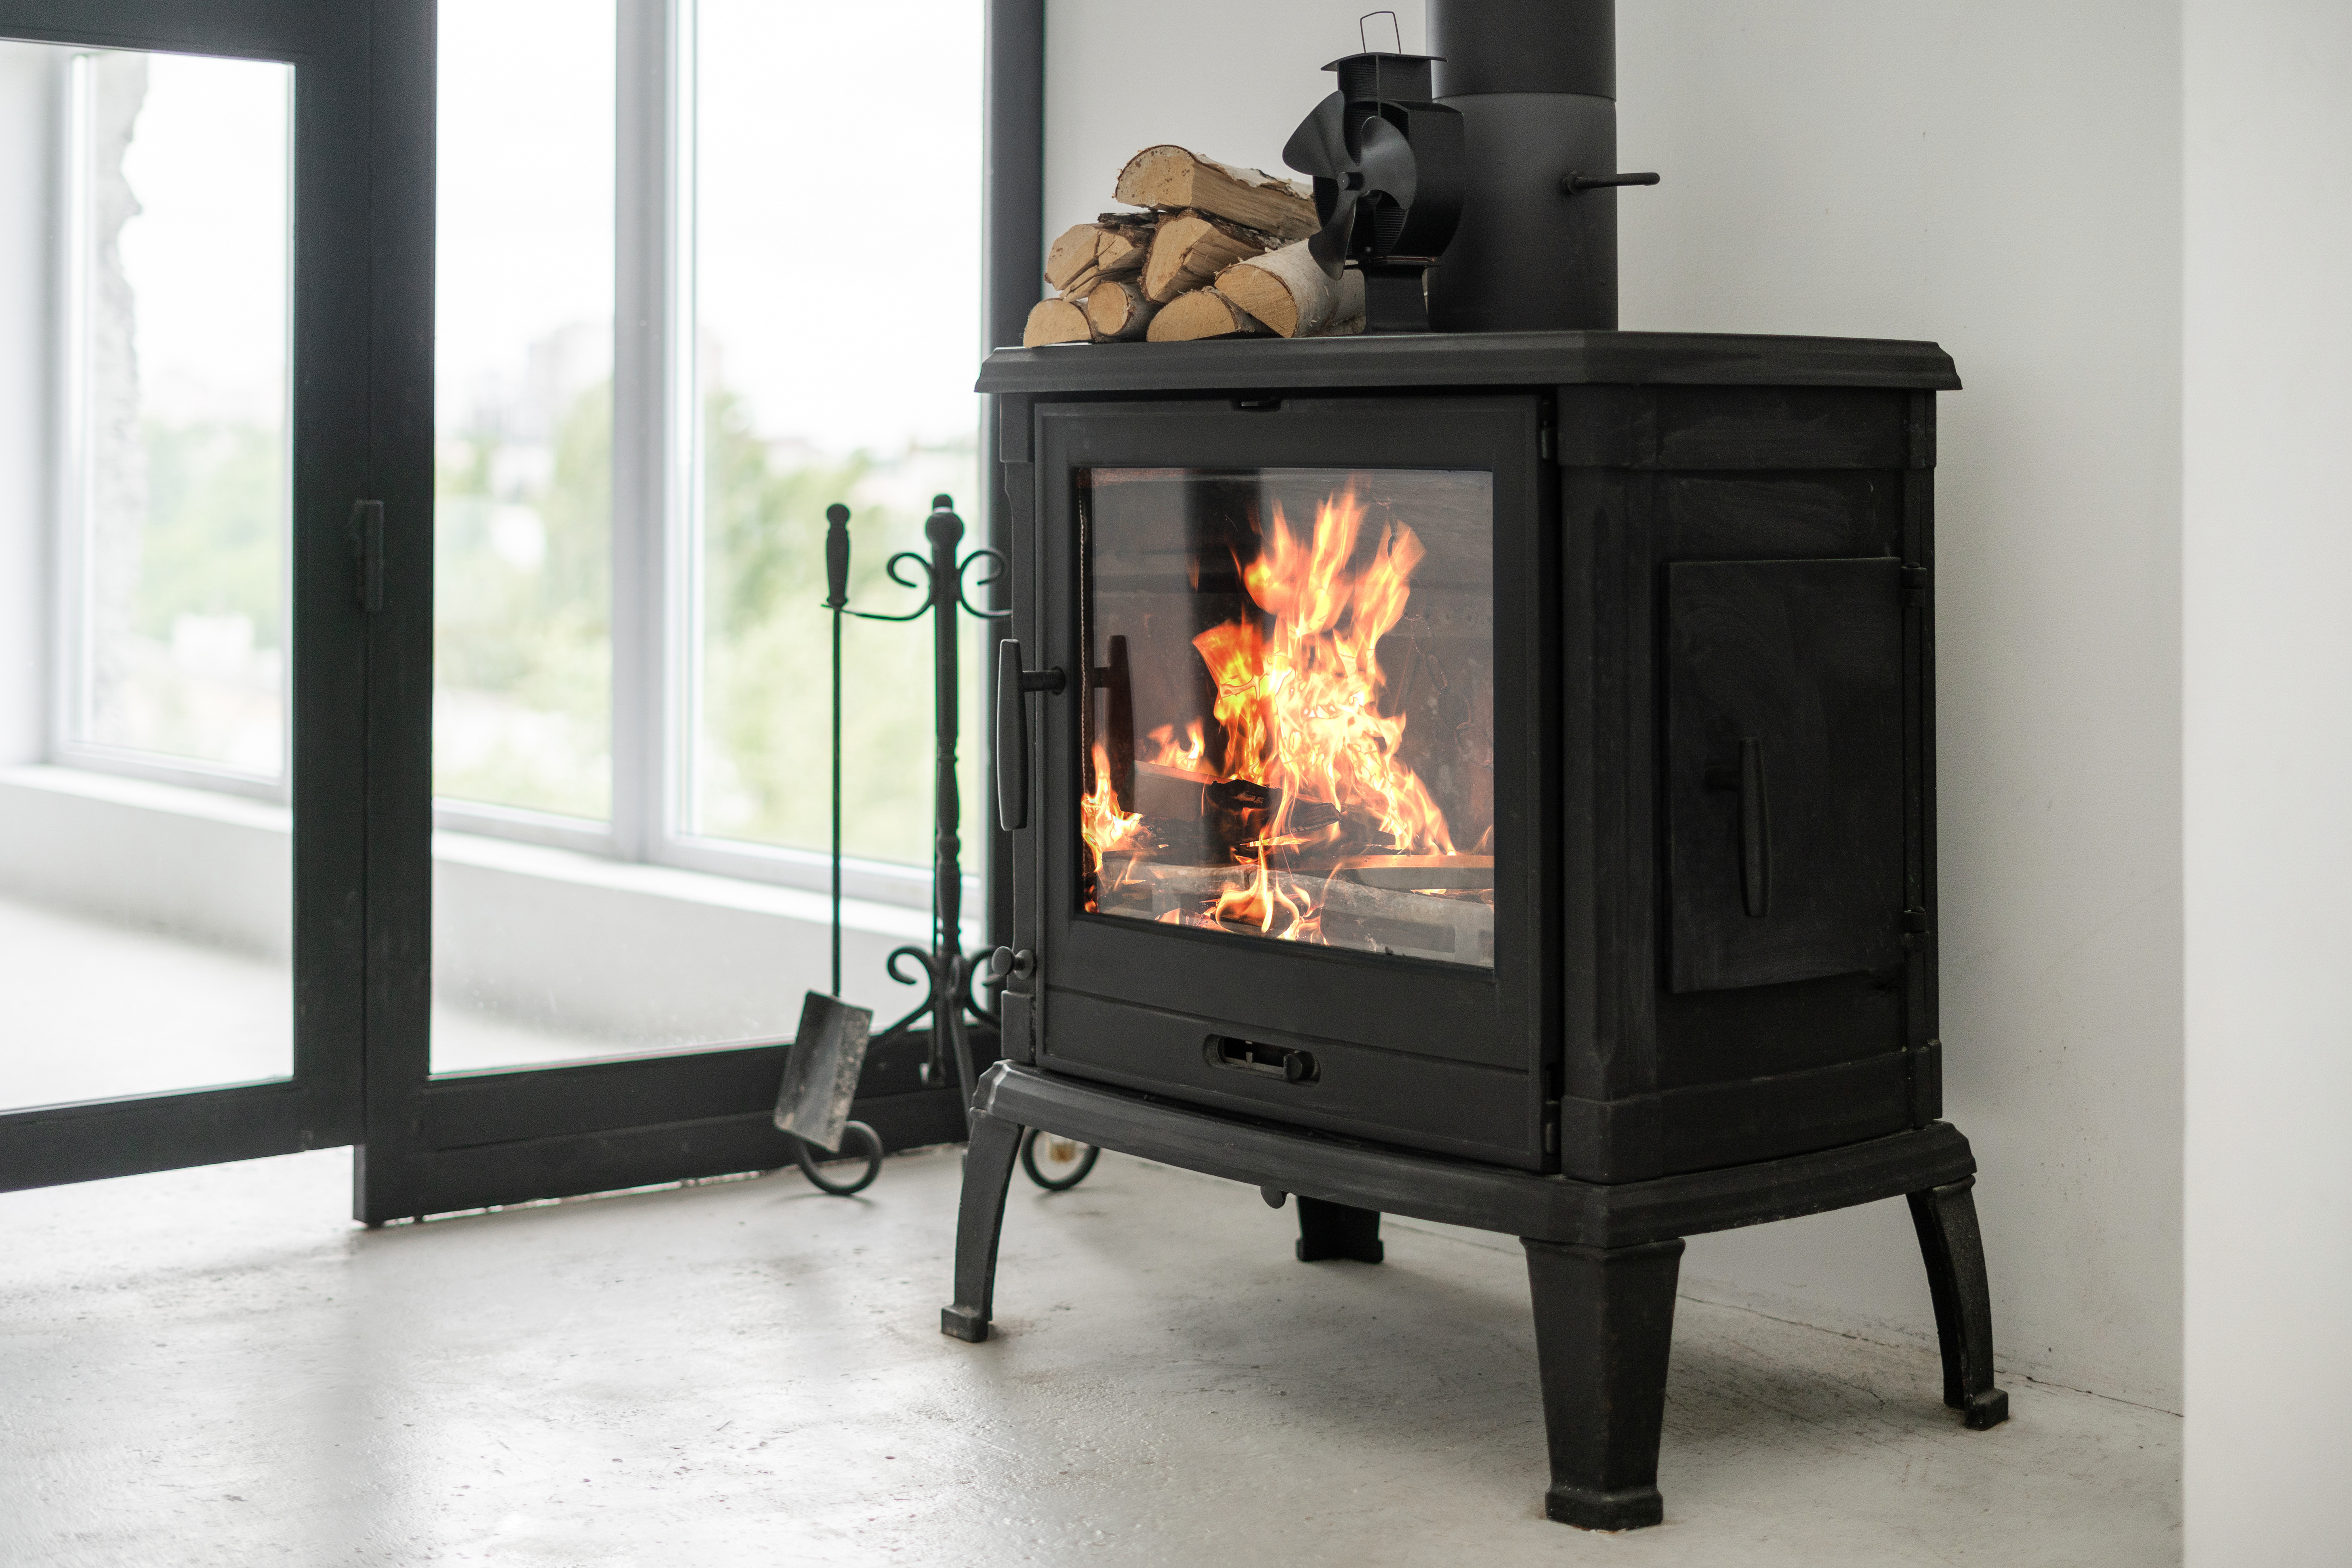 Modern black fireplace with fire inside. 